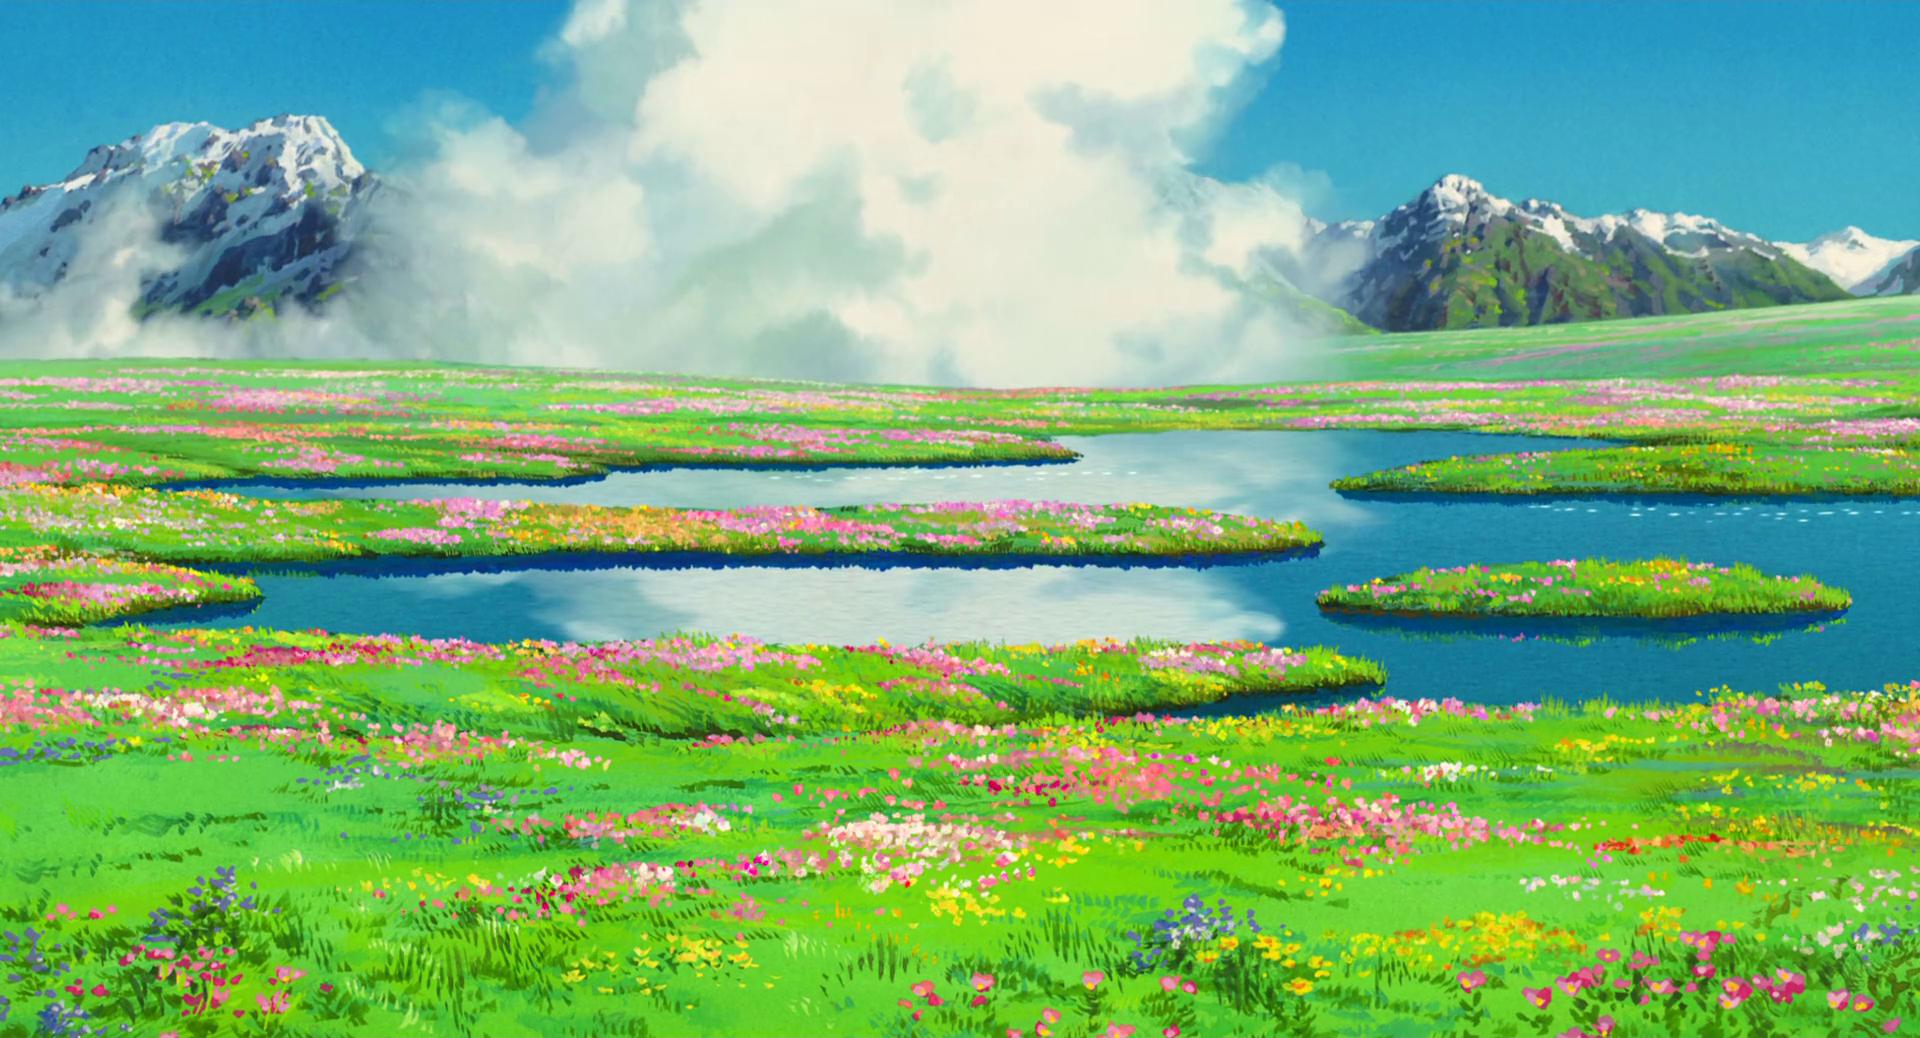 Wallpaper Wednesday Studio Ghibli